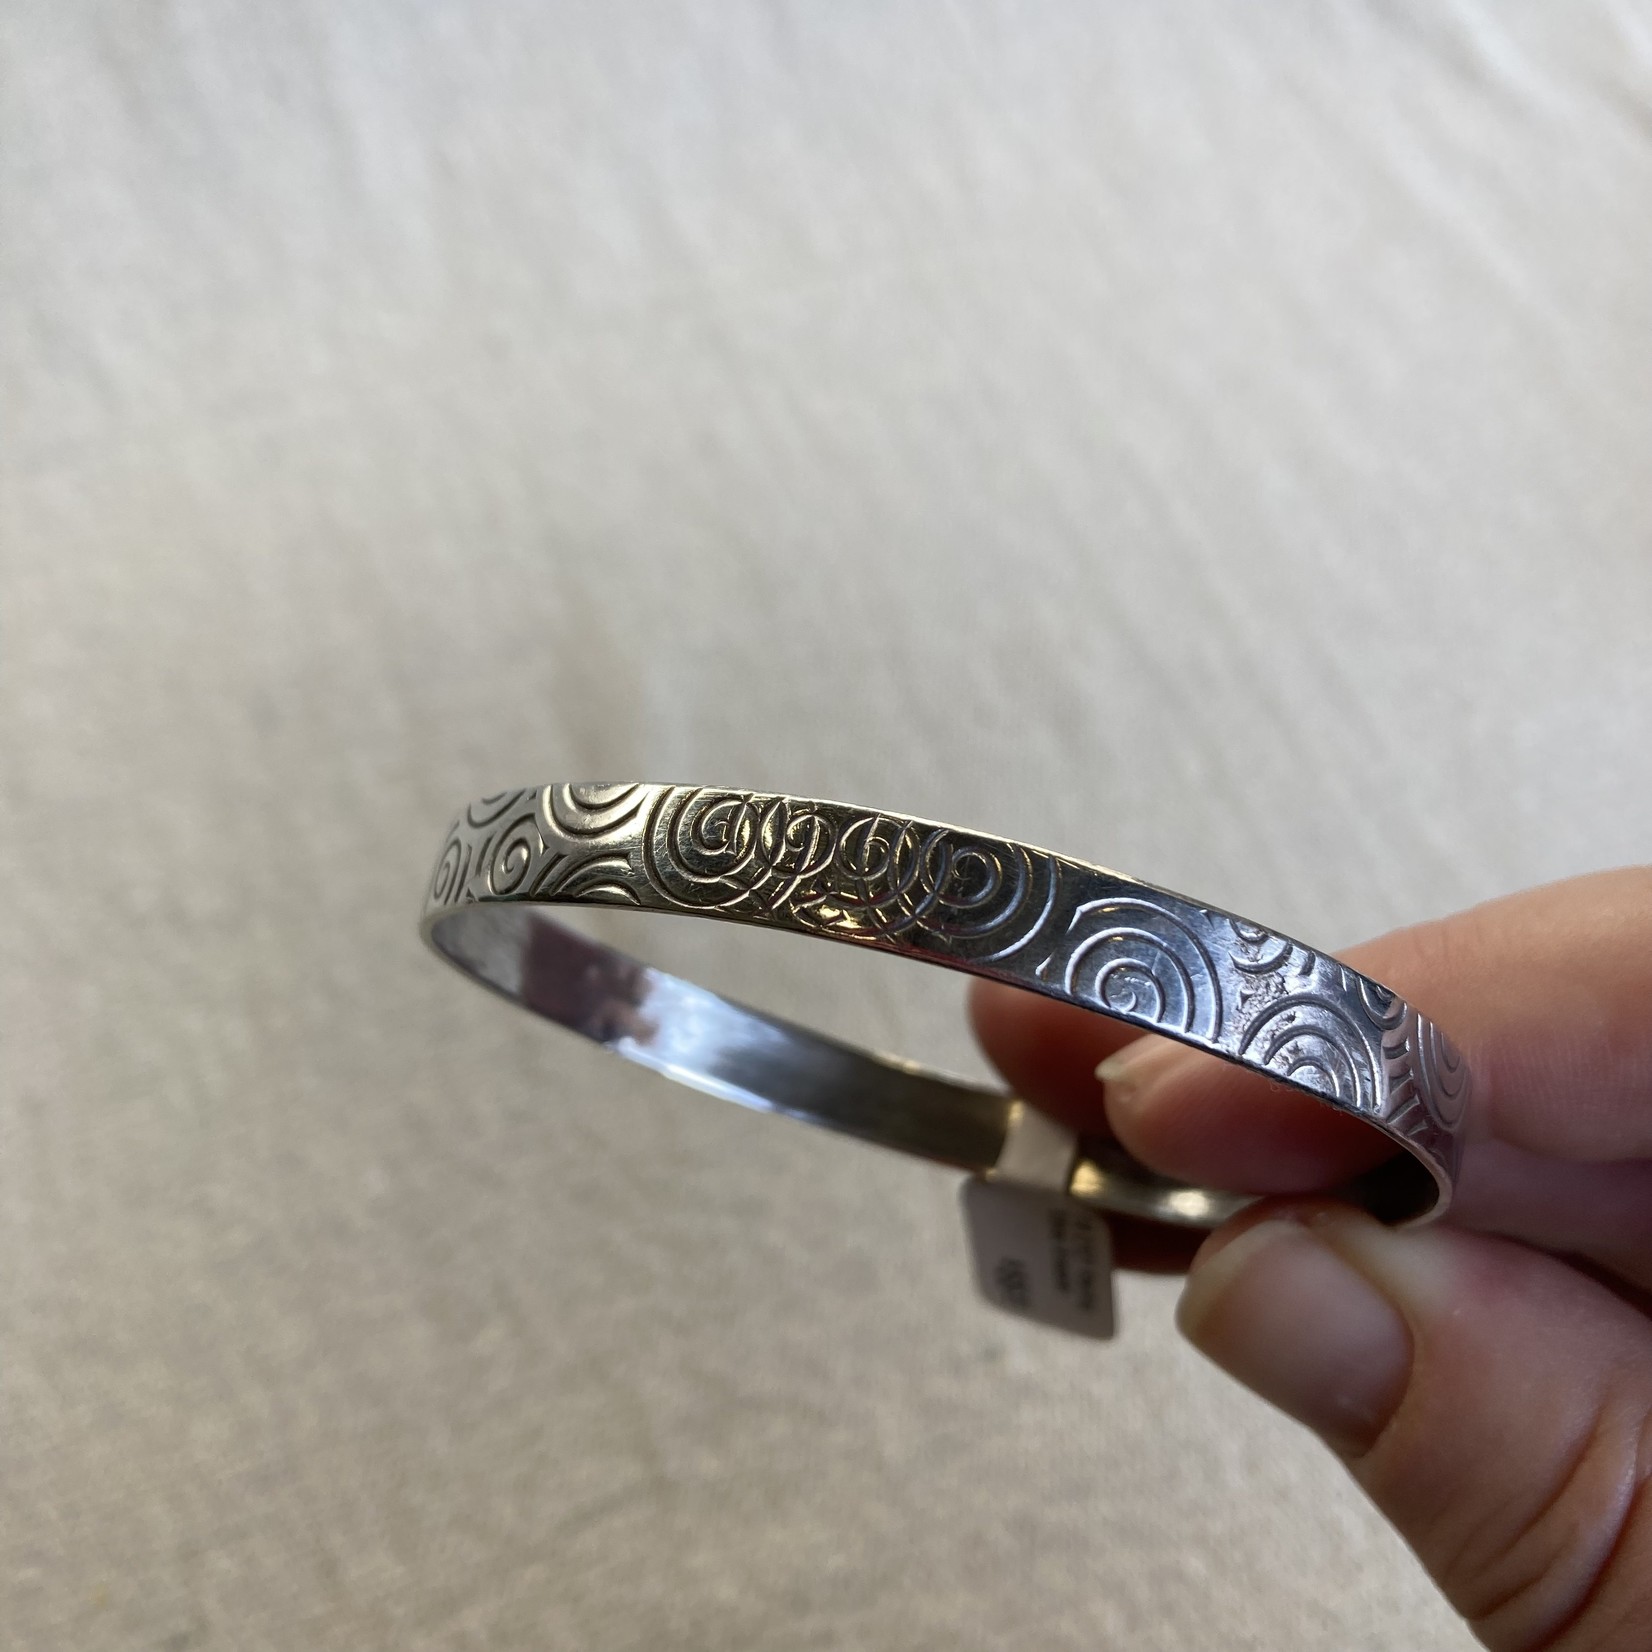 Fishbone Designs FB Stamped Swirly Sterling Bracelet #2121